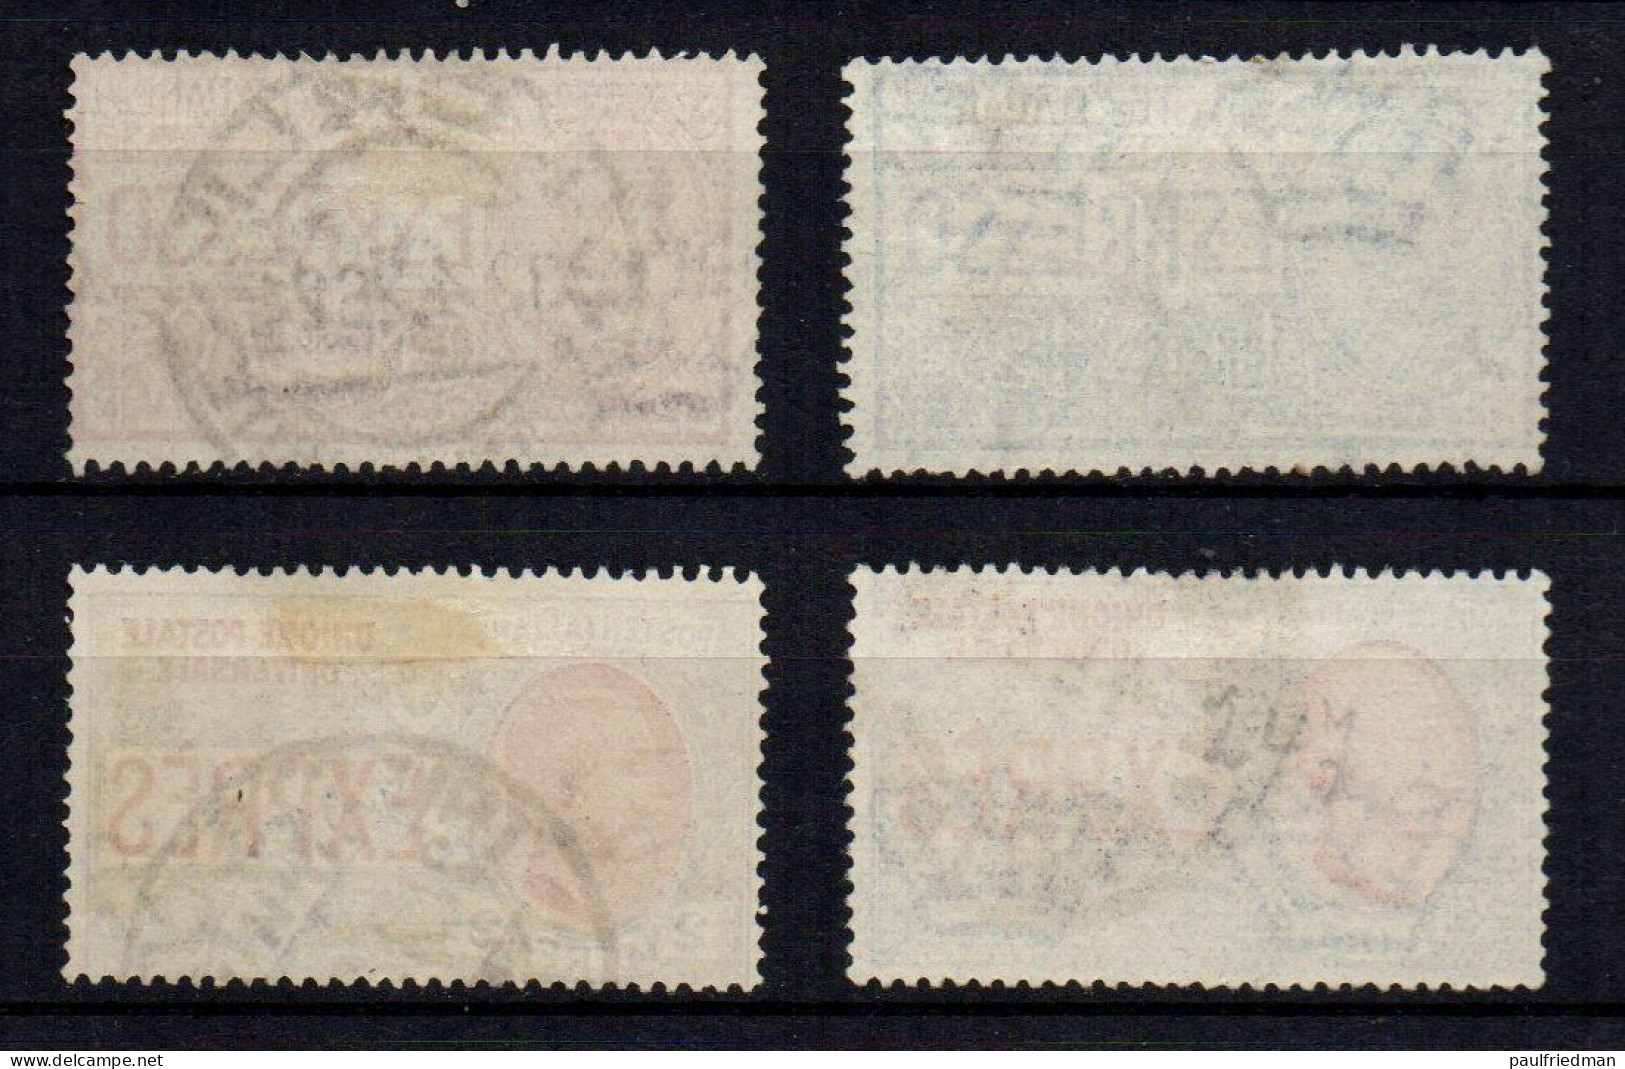 Regno 1924/5 - Espressi - Serie Completa Usata - Express Mail